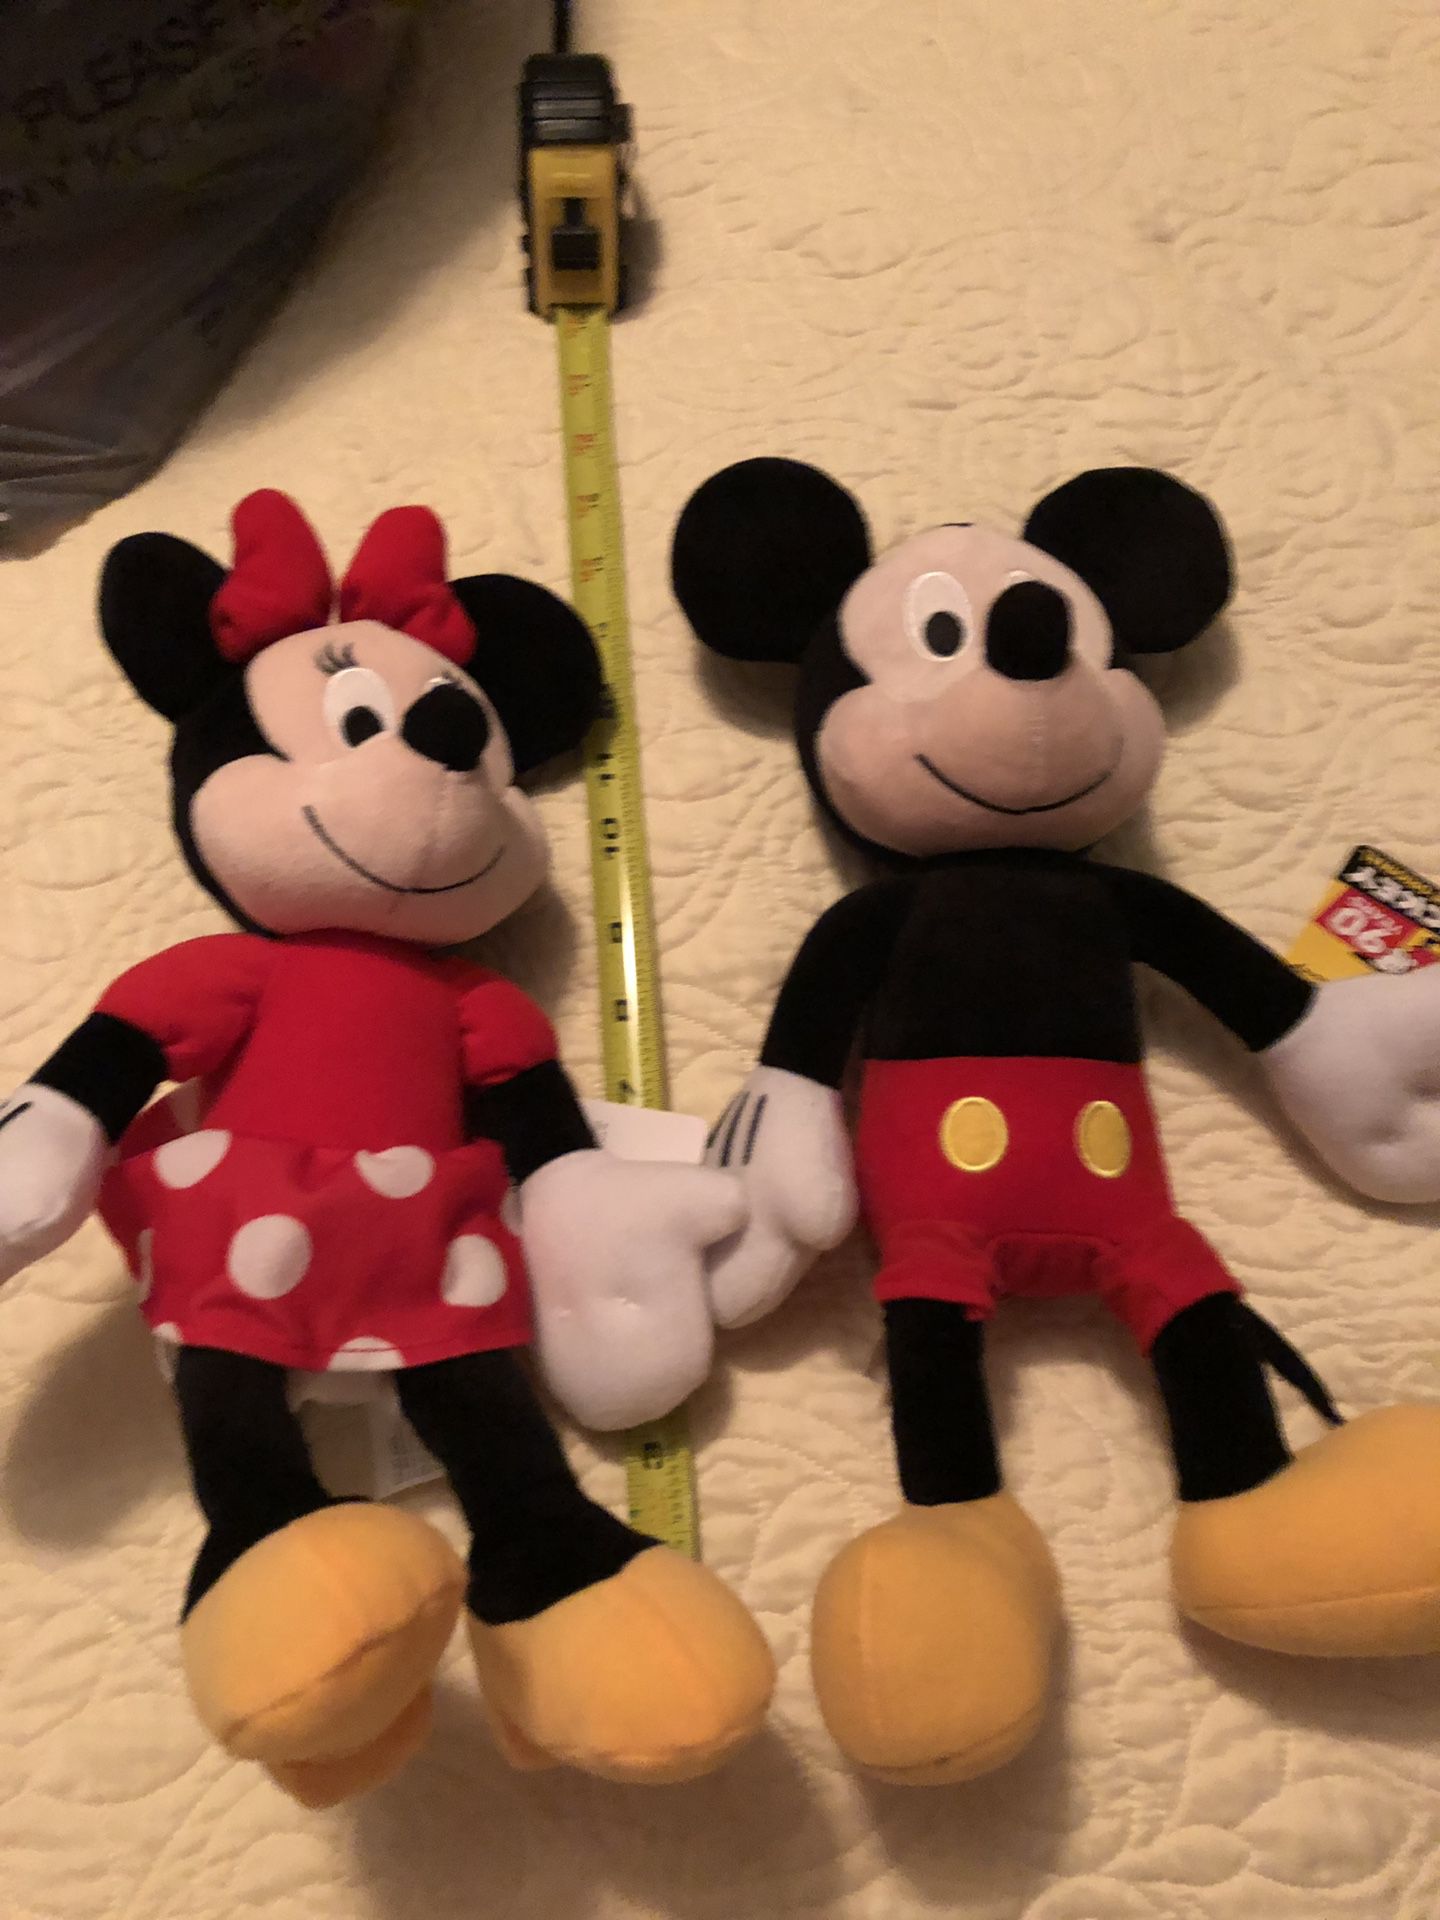 Mickey and Minnie stuffed animals